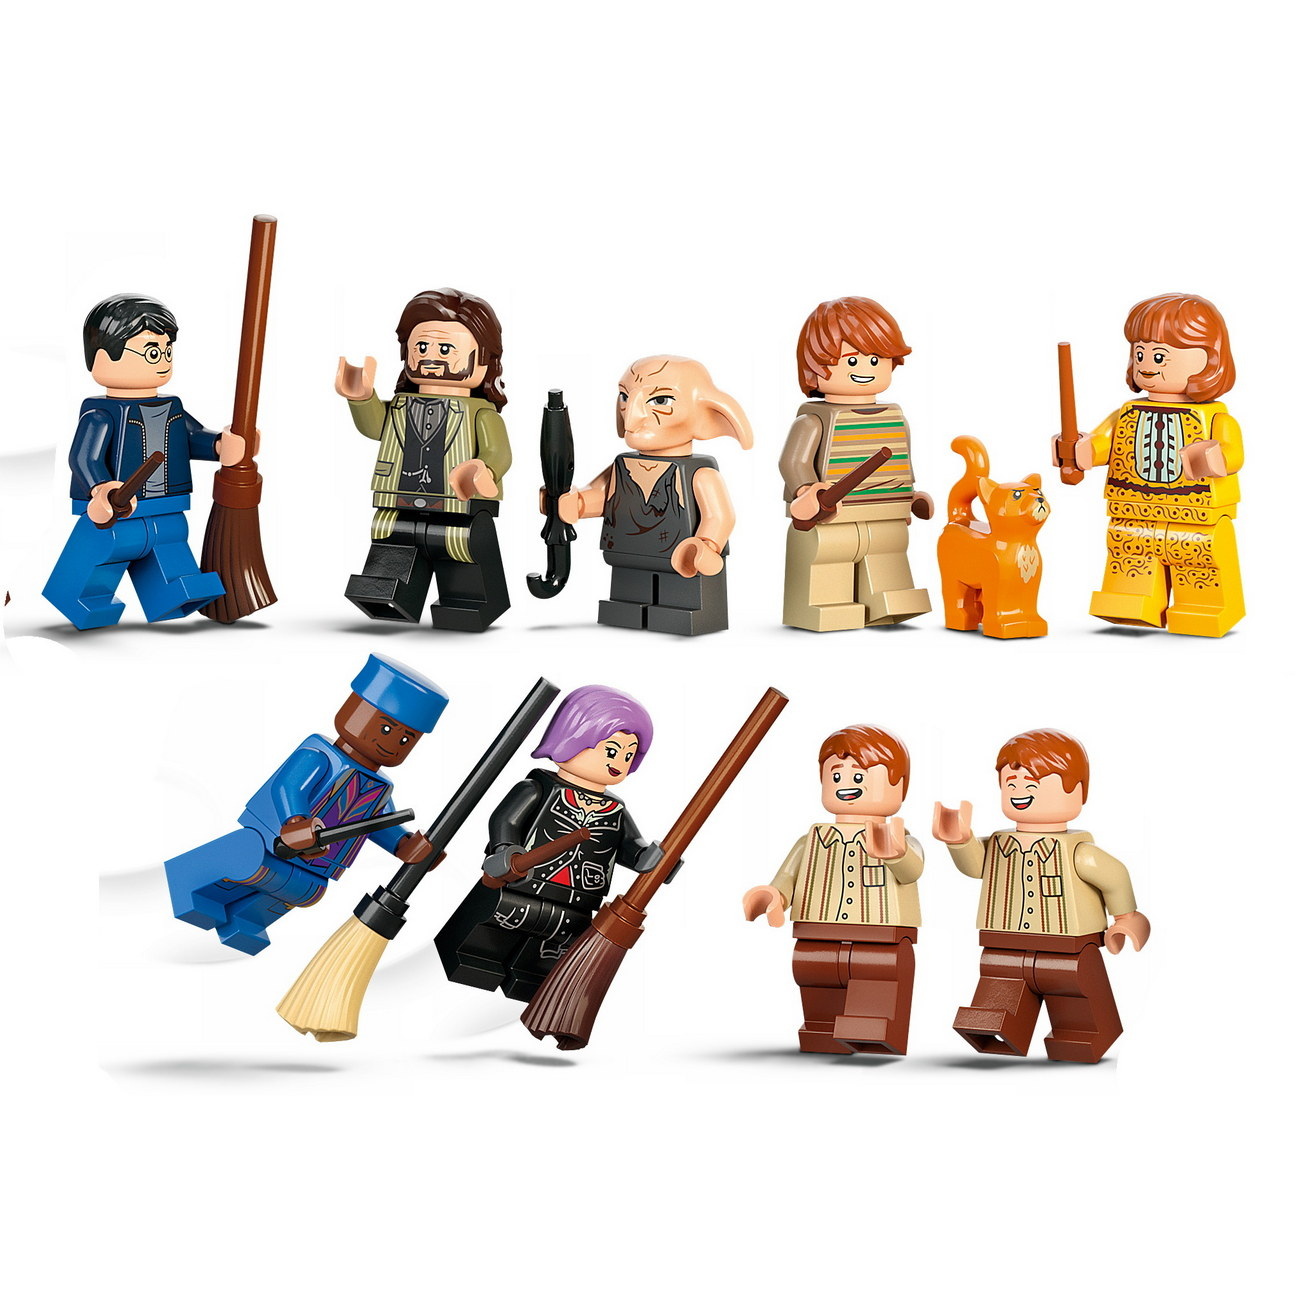 LEGO Harry Potter 76408 - Grimmauldplatz Nr. 12